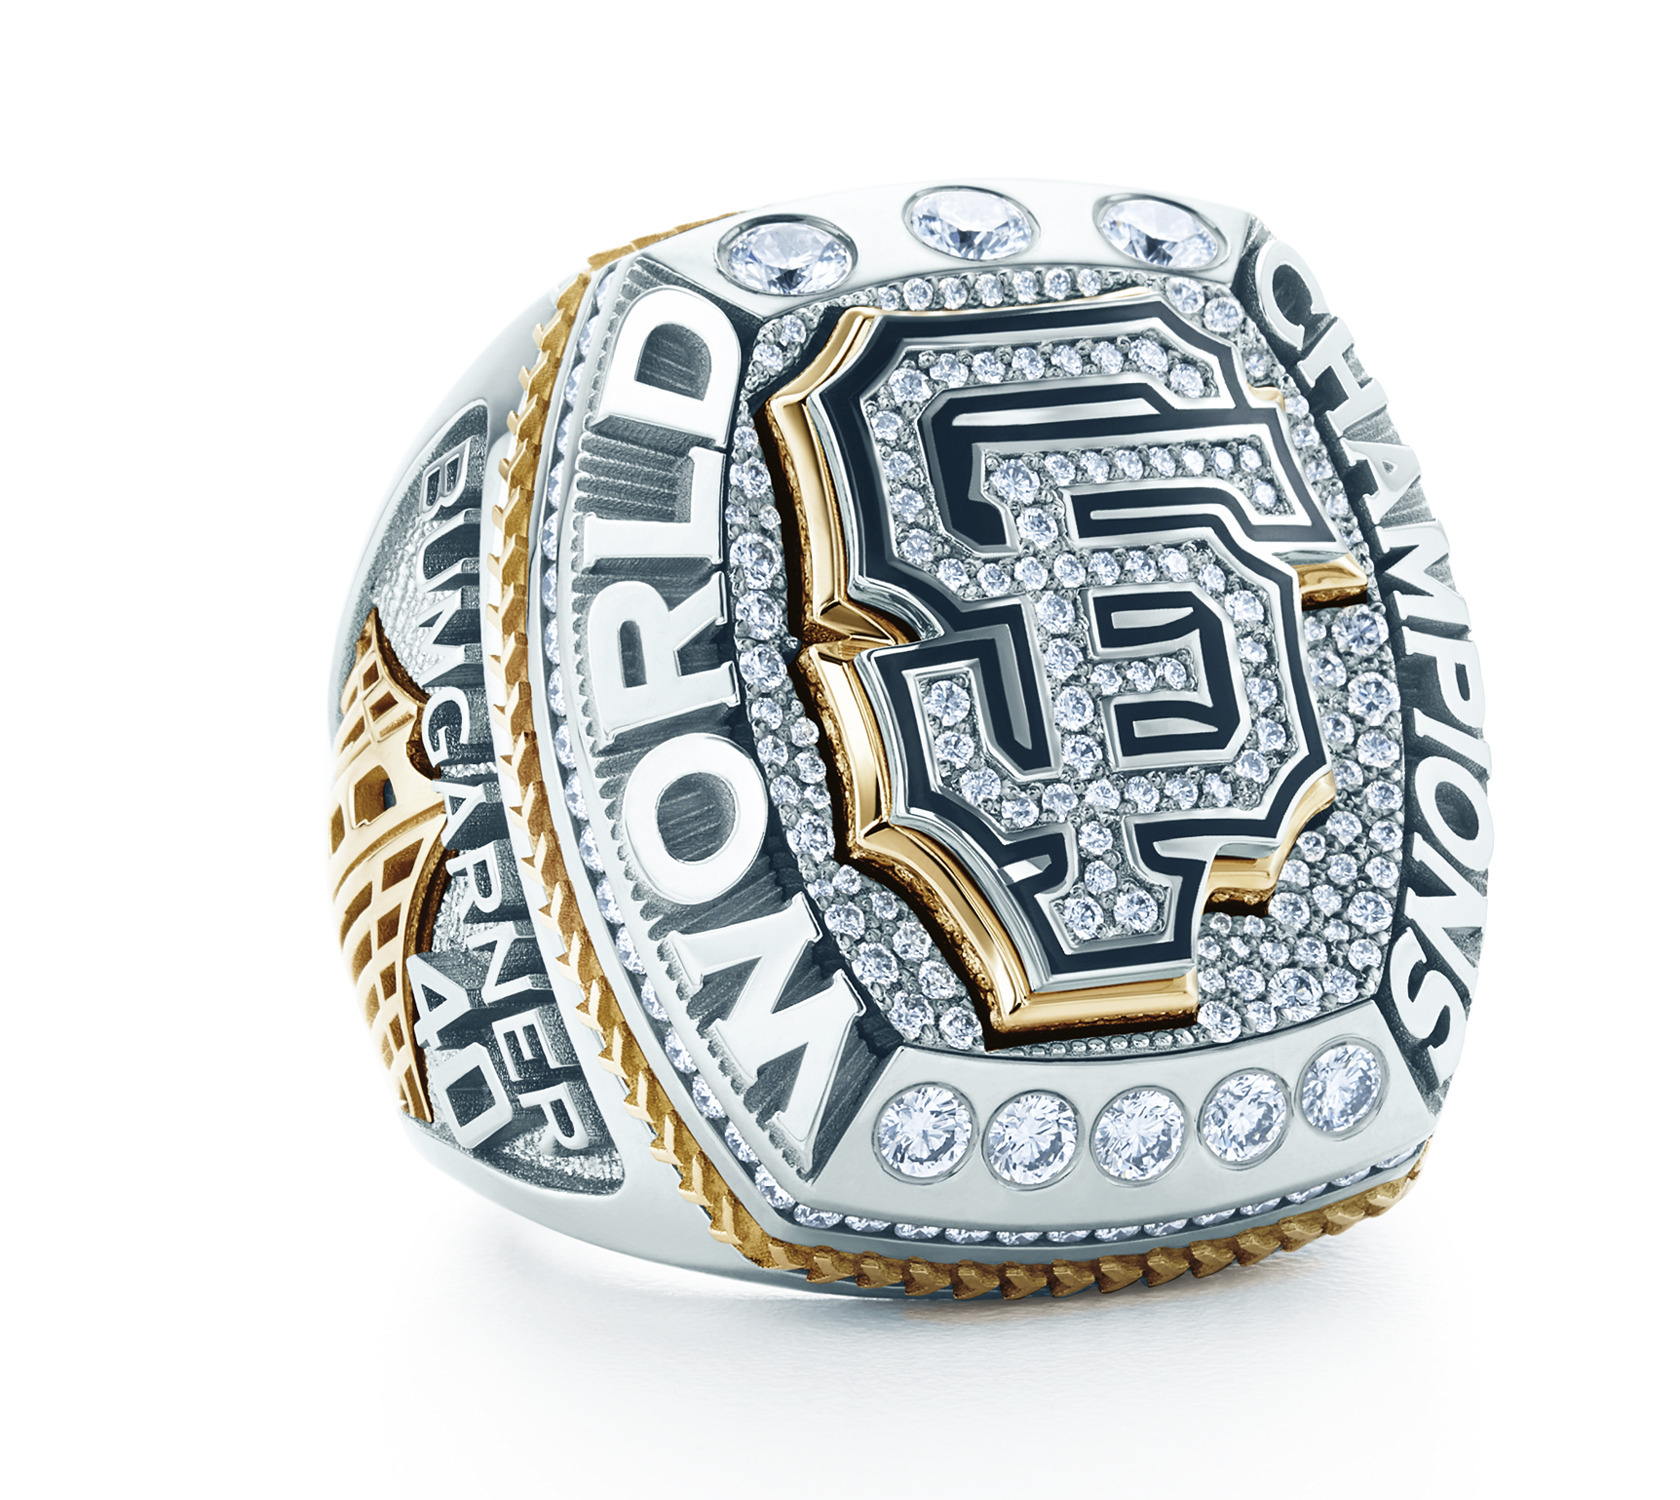 The 2014 World Series championship ring belonging to San Francisco